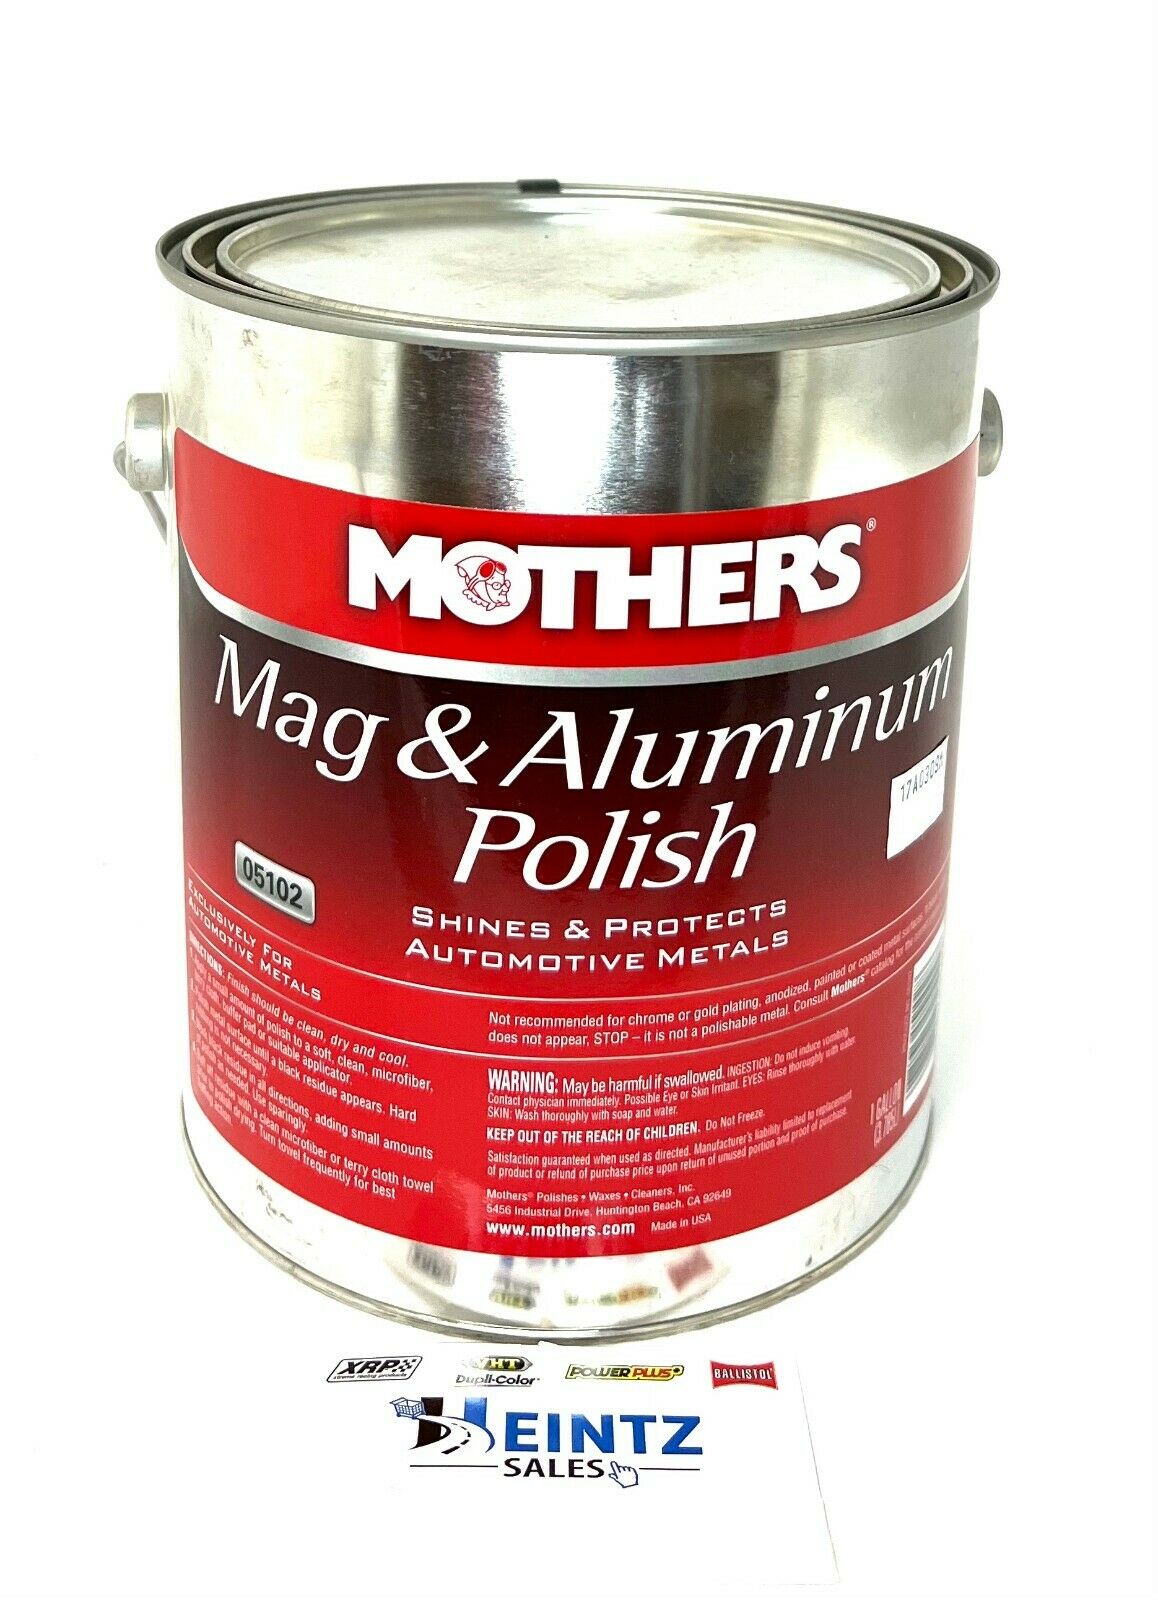 MOTHERS 05102 Mag & Aluminum Polish - Shines & Protects - Brass - 1 GA –  Heintz Sales